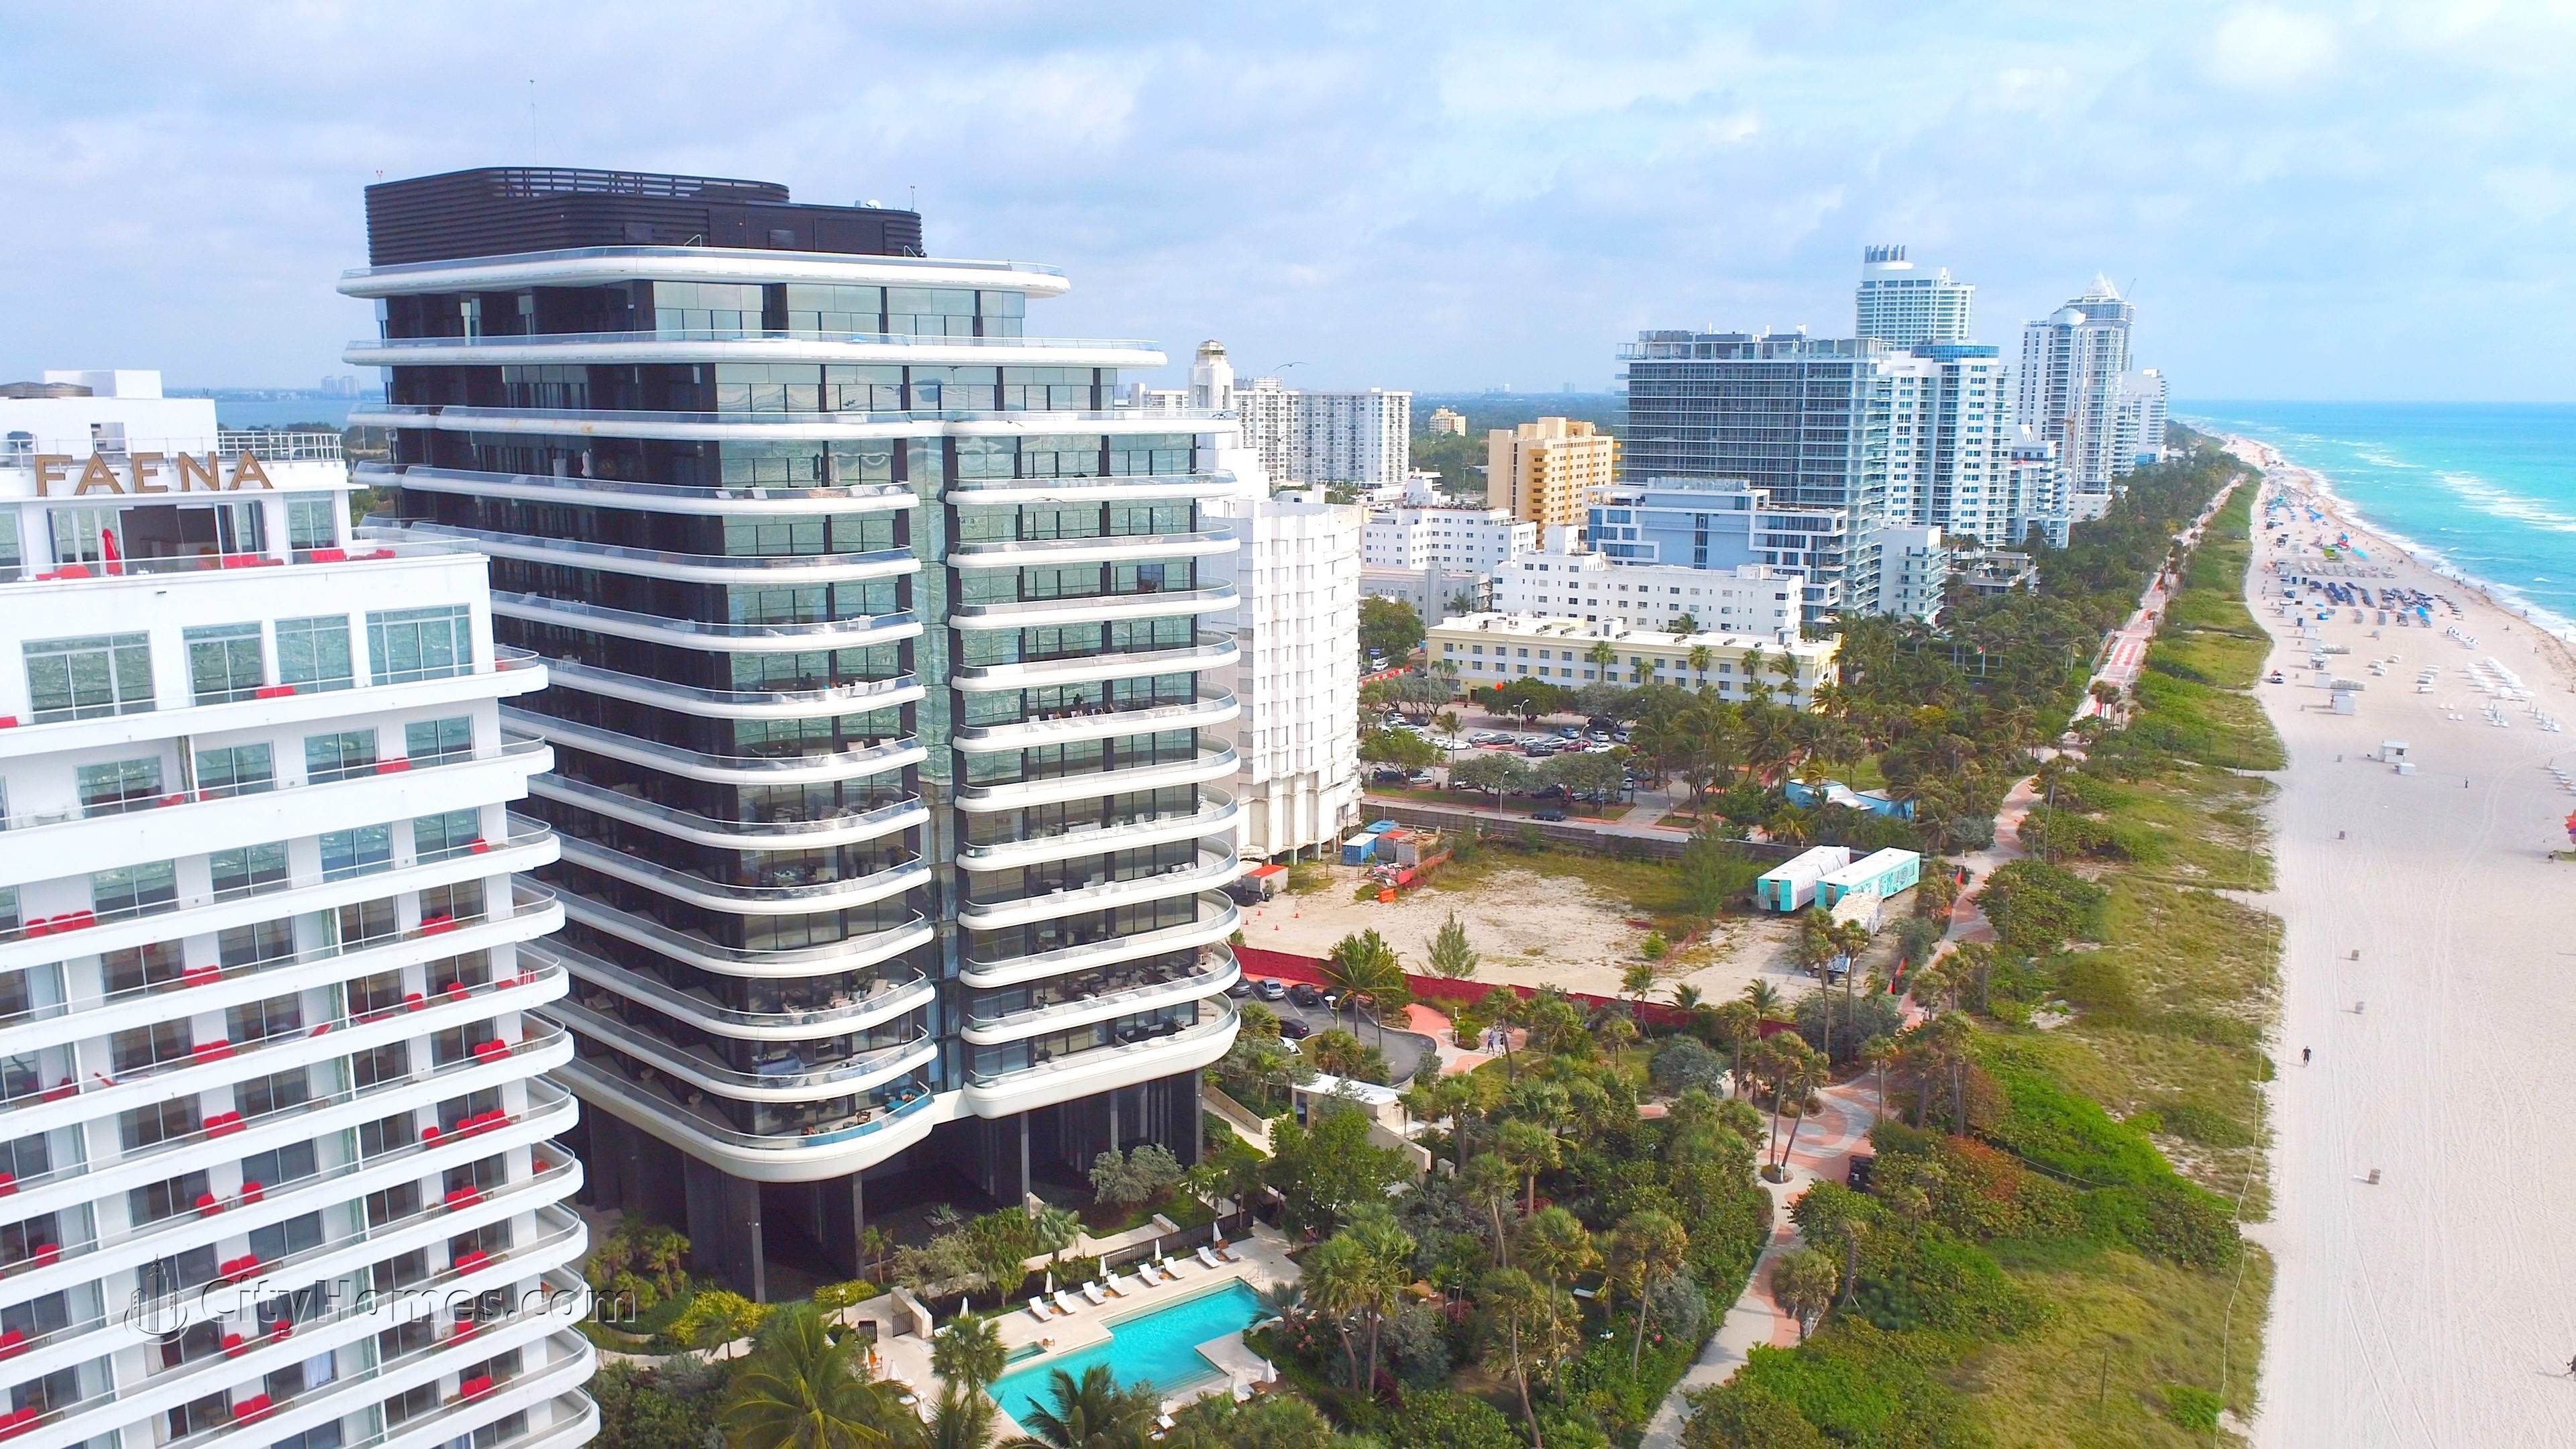 FAENA HOUSE MIAMI BEACH gebouw op 3315 Collins Avenue, Mid Beach, Miami Beach, FL 33140